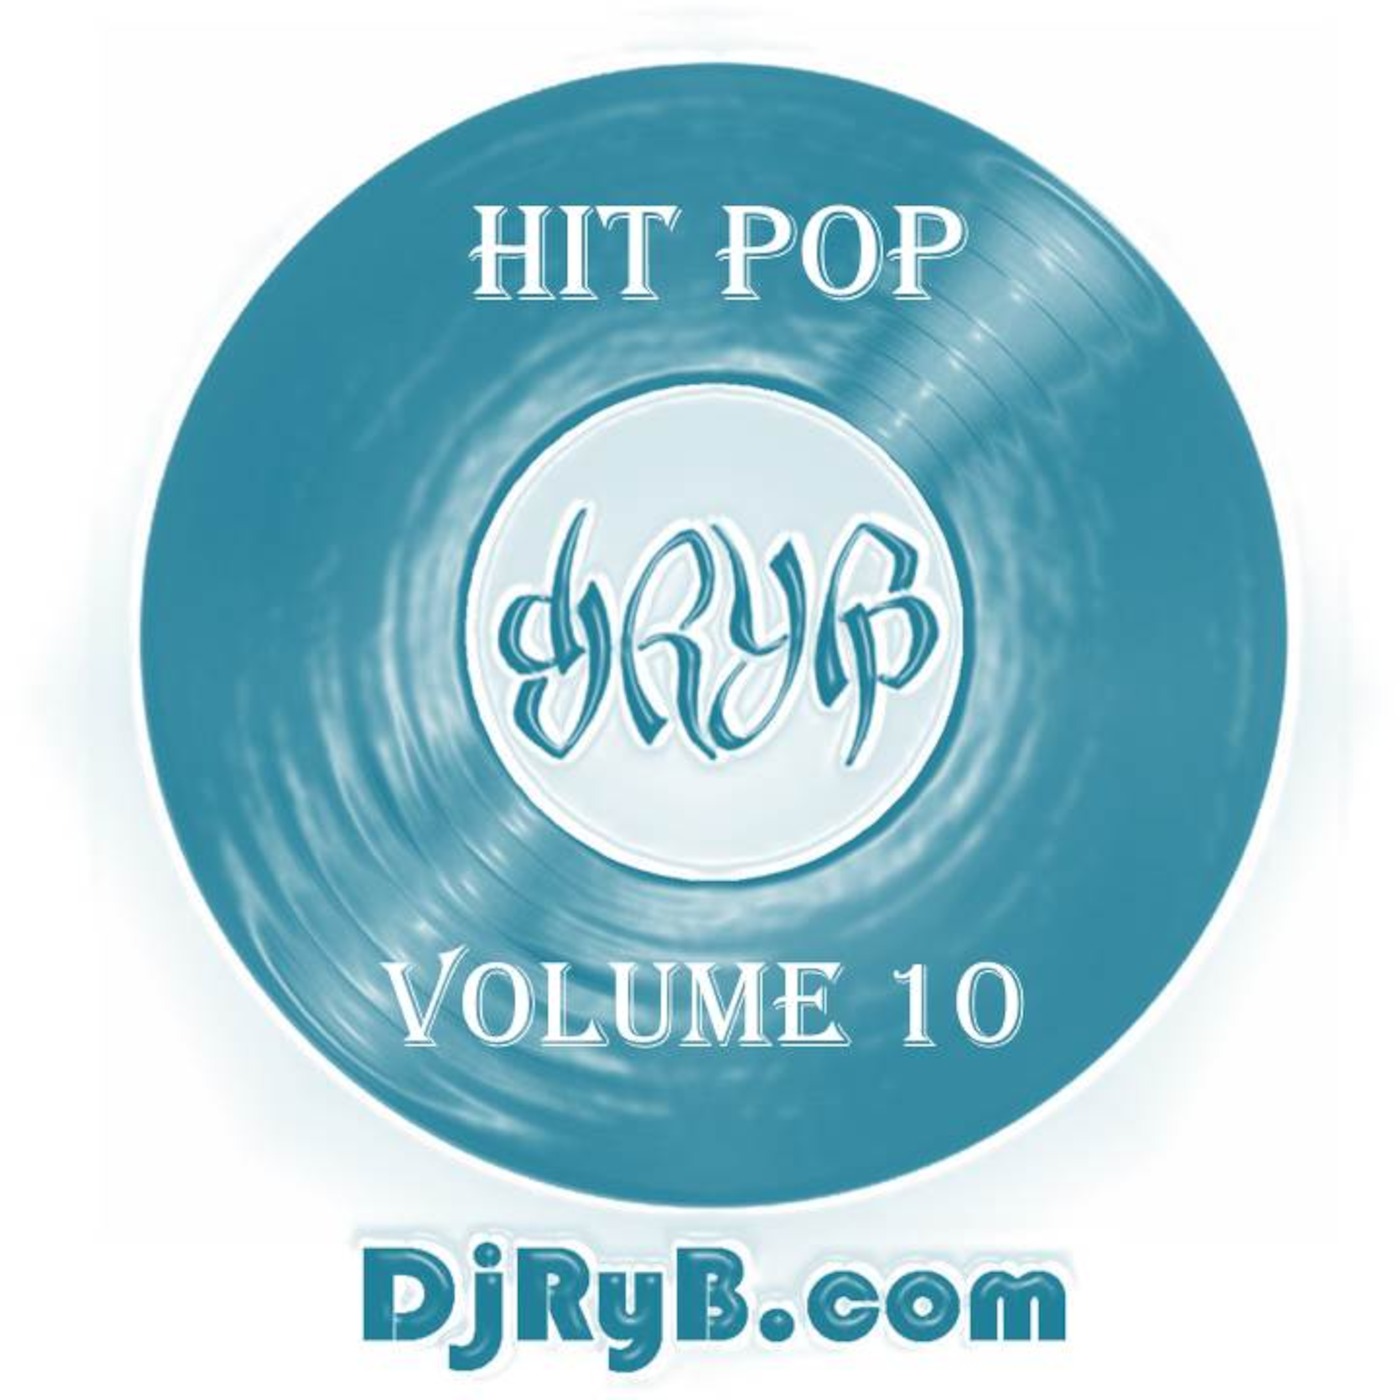 Hit Pop Volume 10 - Dj RyB